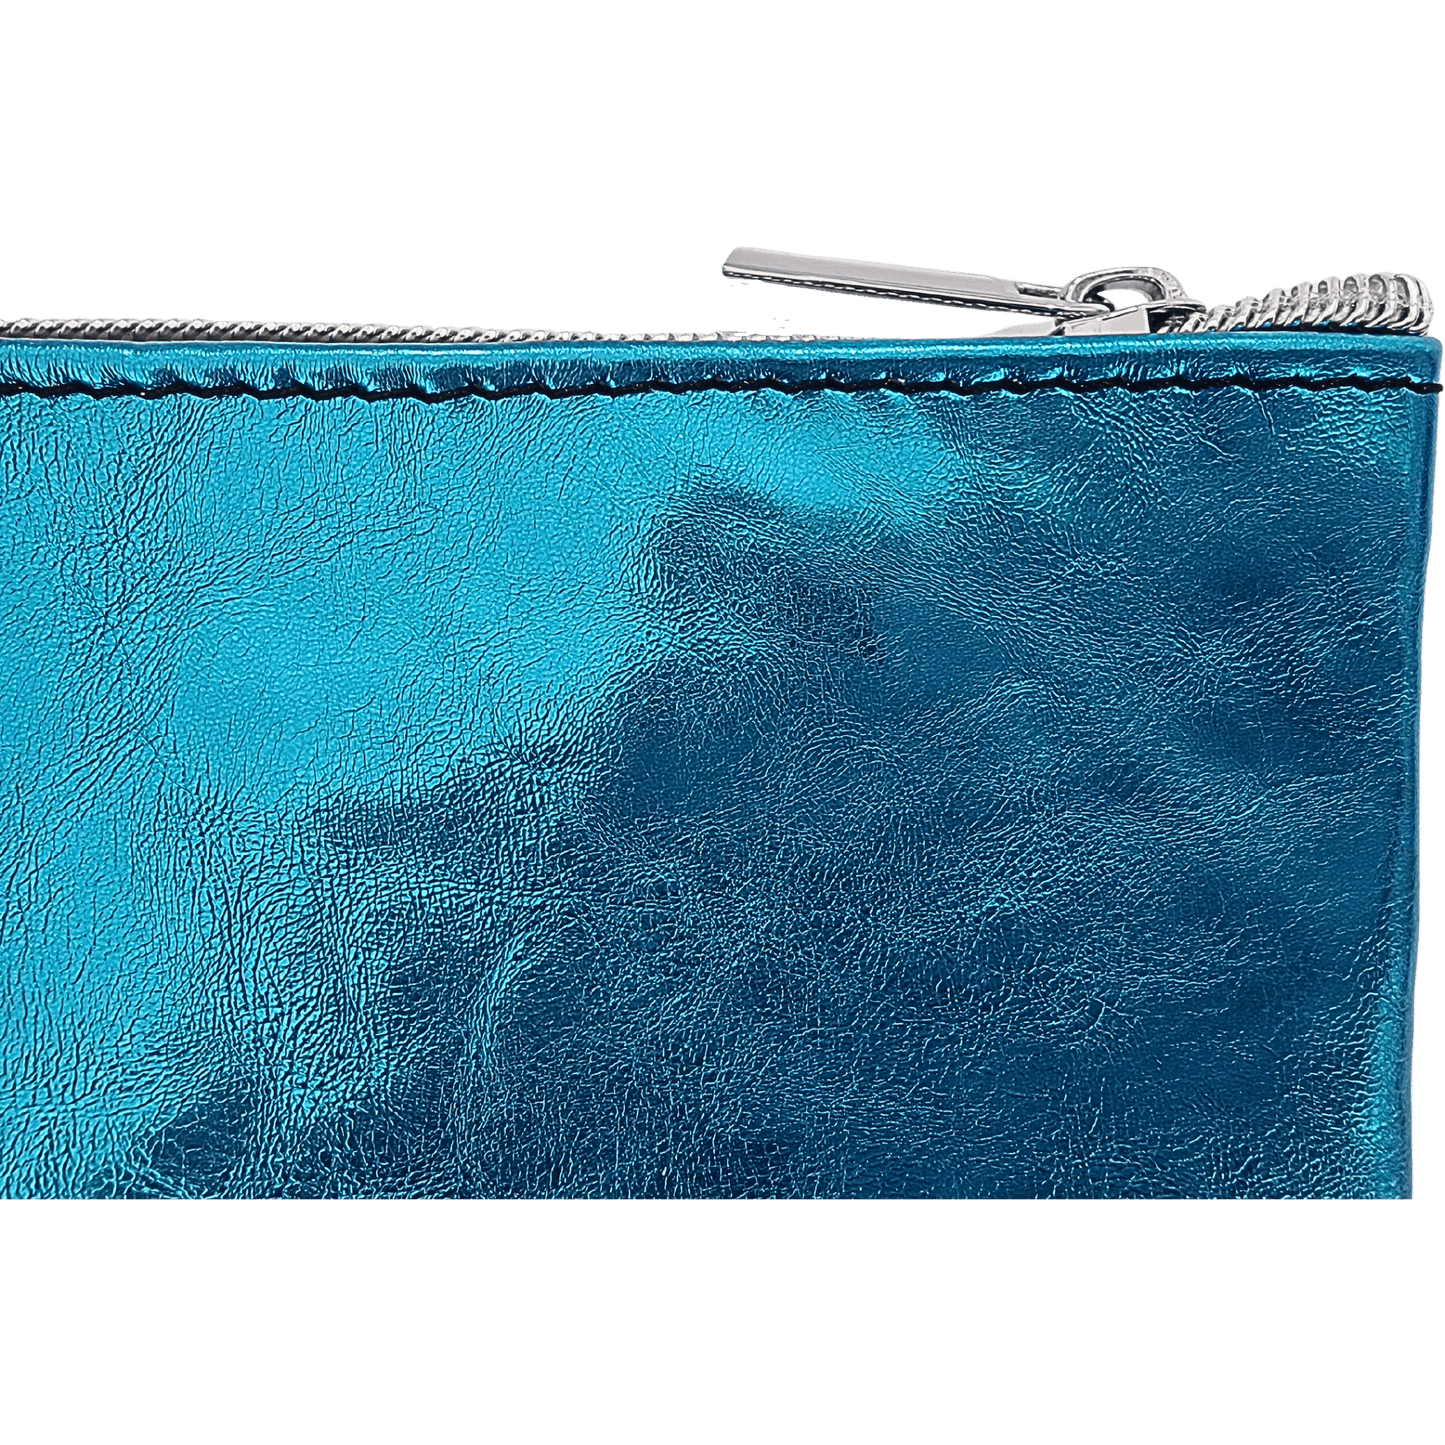 Pochette en cuir Bleu métallisé Lisa - Vavounette&Co